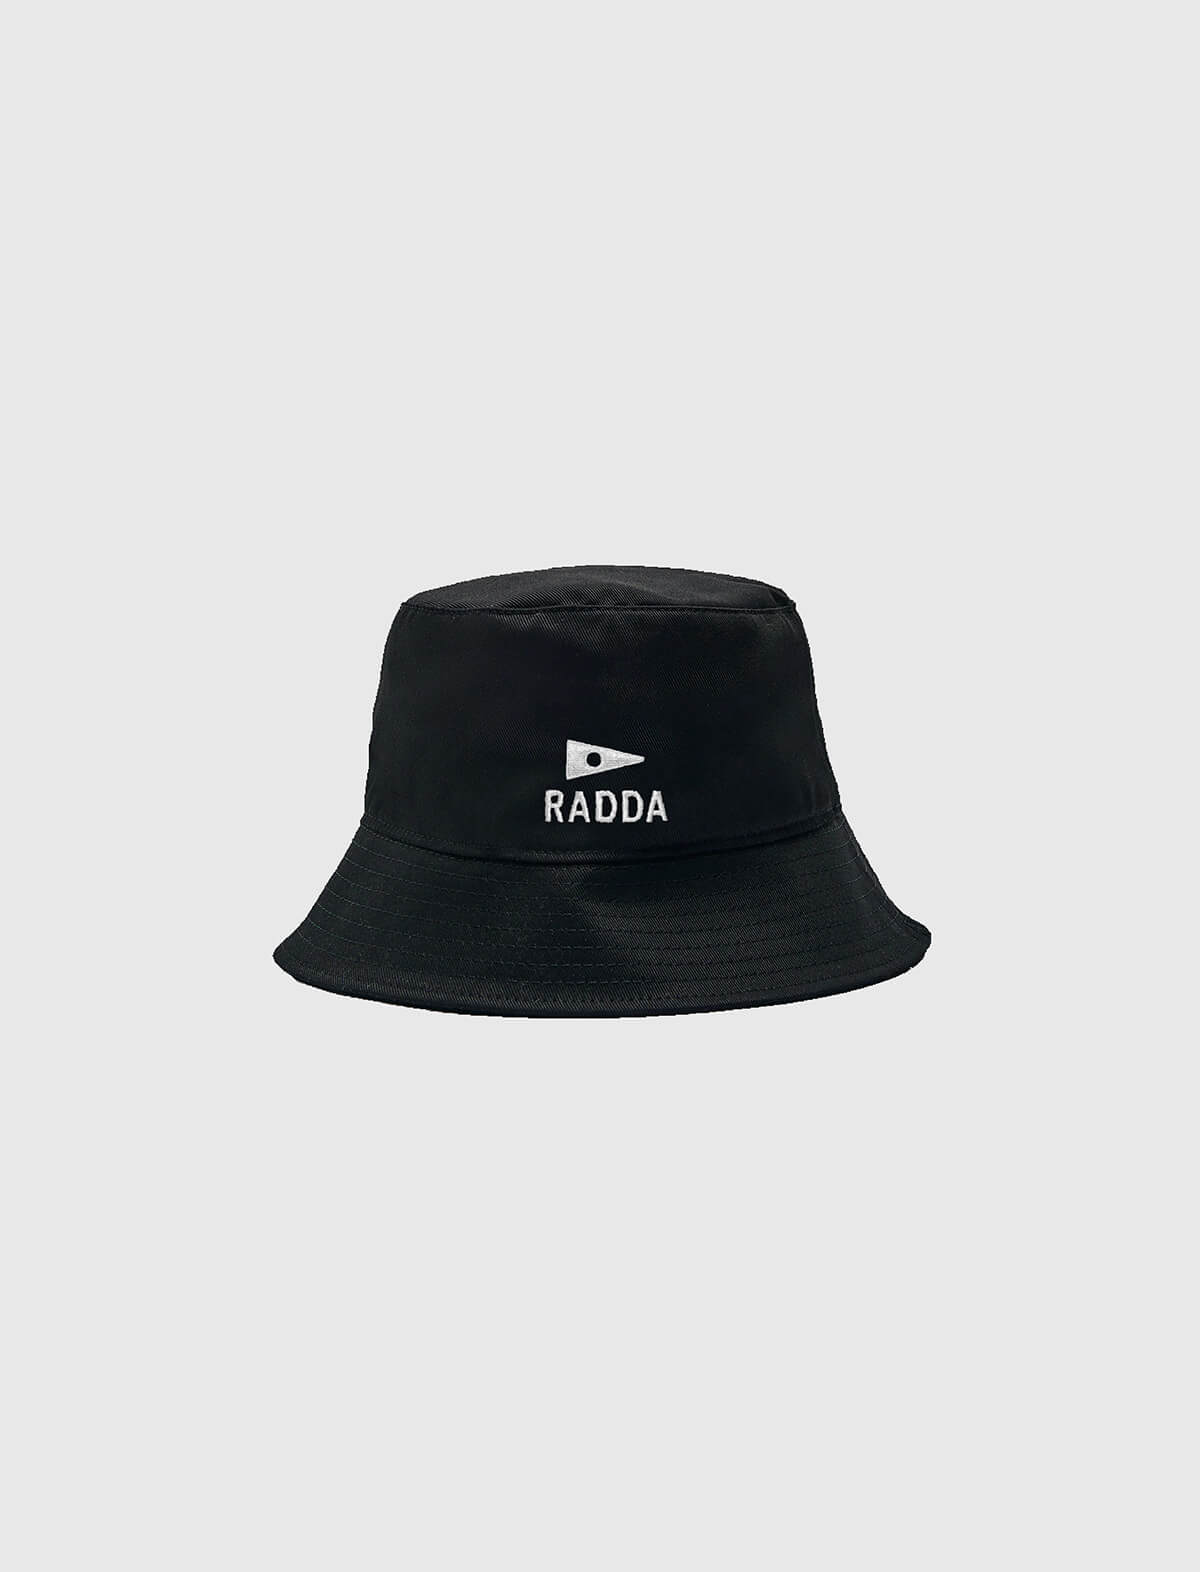 RADDA GOLF Merapi Bucket Hat in Black